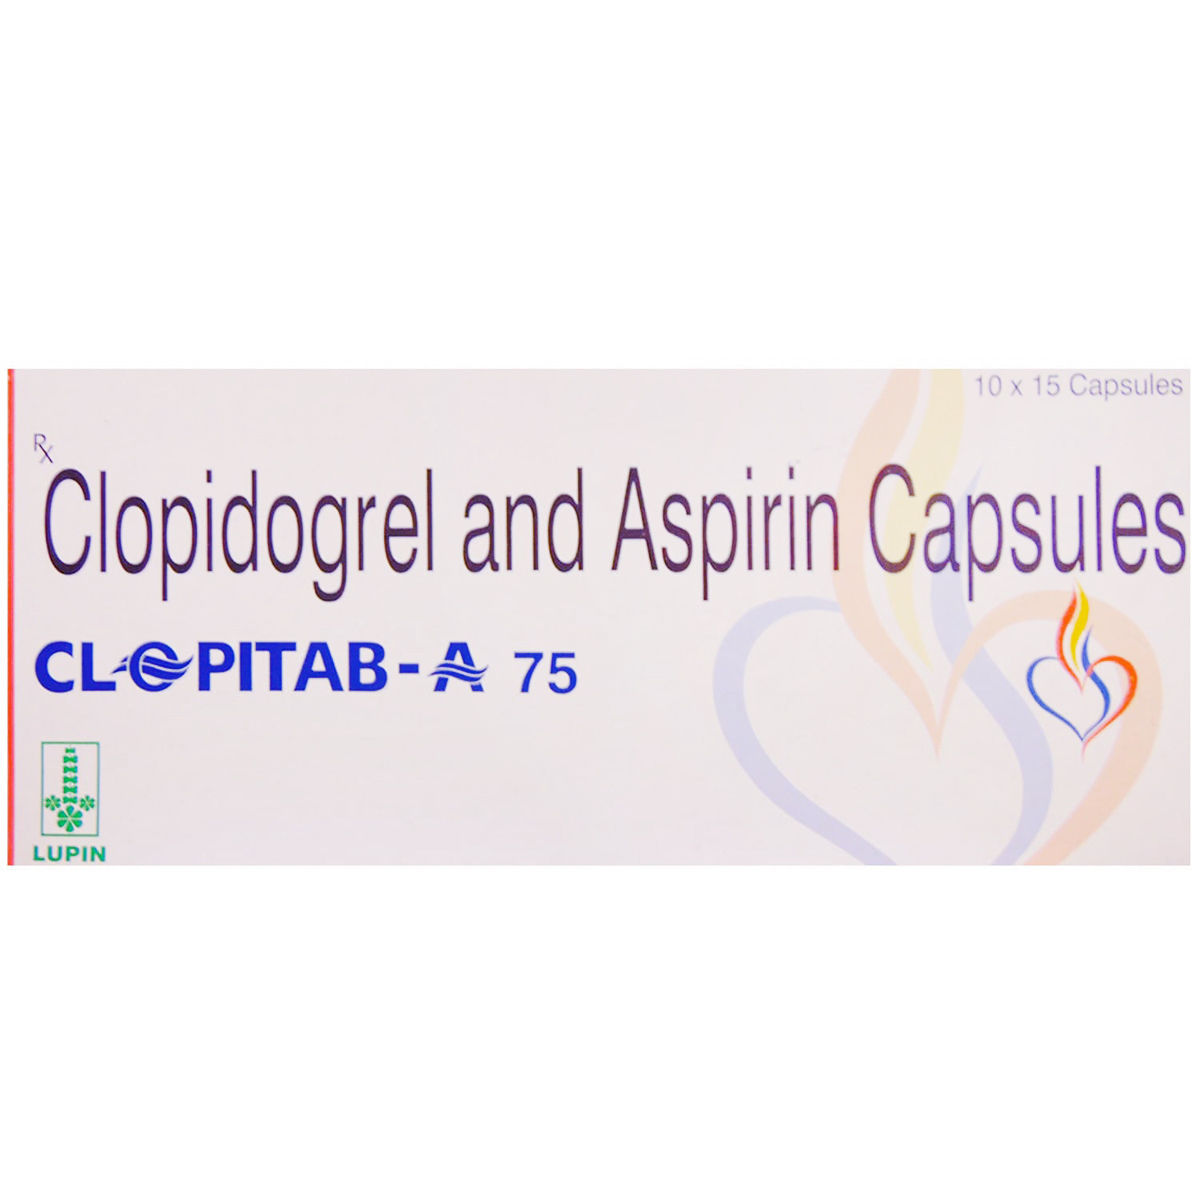 Clopitab-A 75 Capsule 15's, Pack of 15 CAPSULES